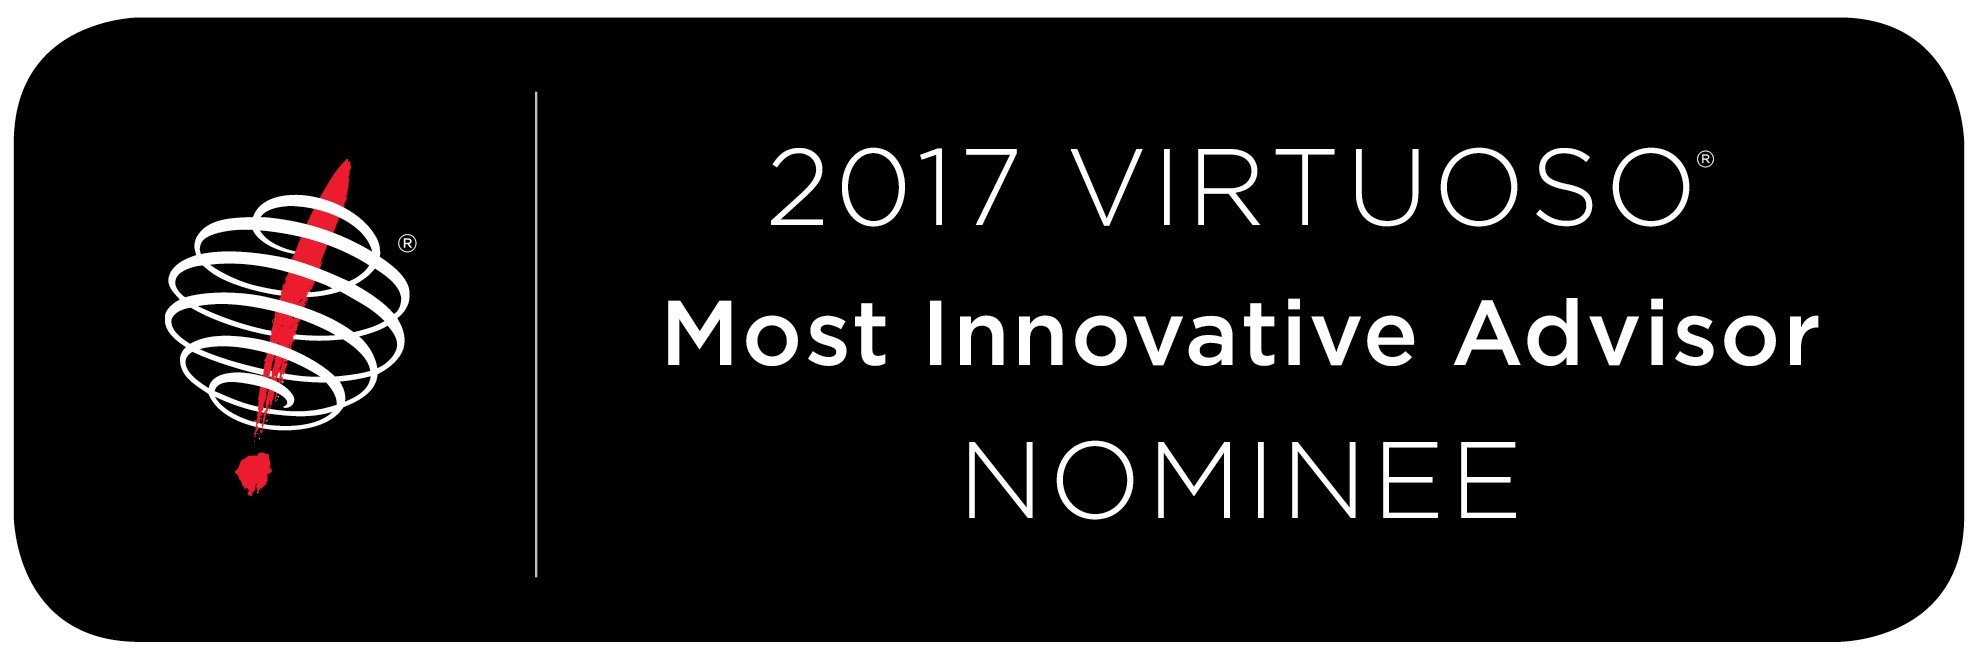 2017 Virtuoso Most Innovative Advisor Nominee